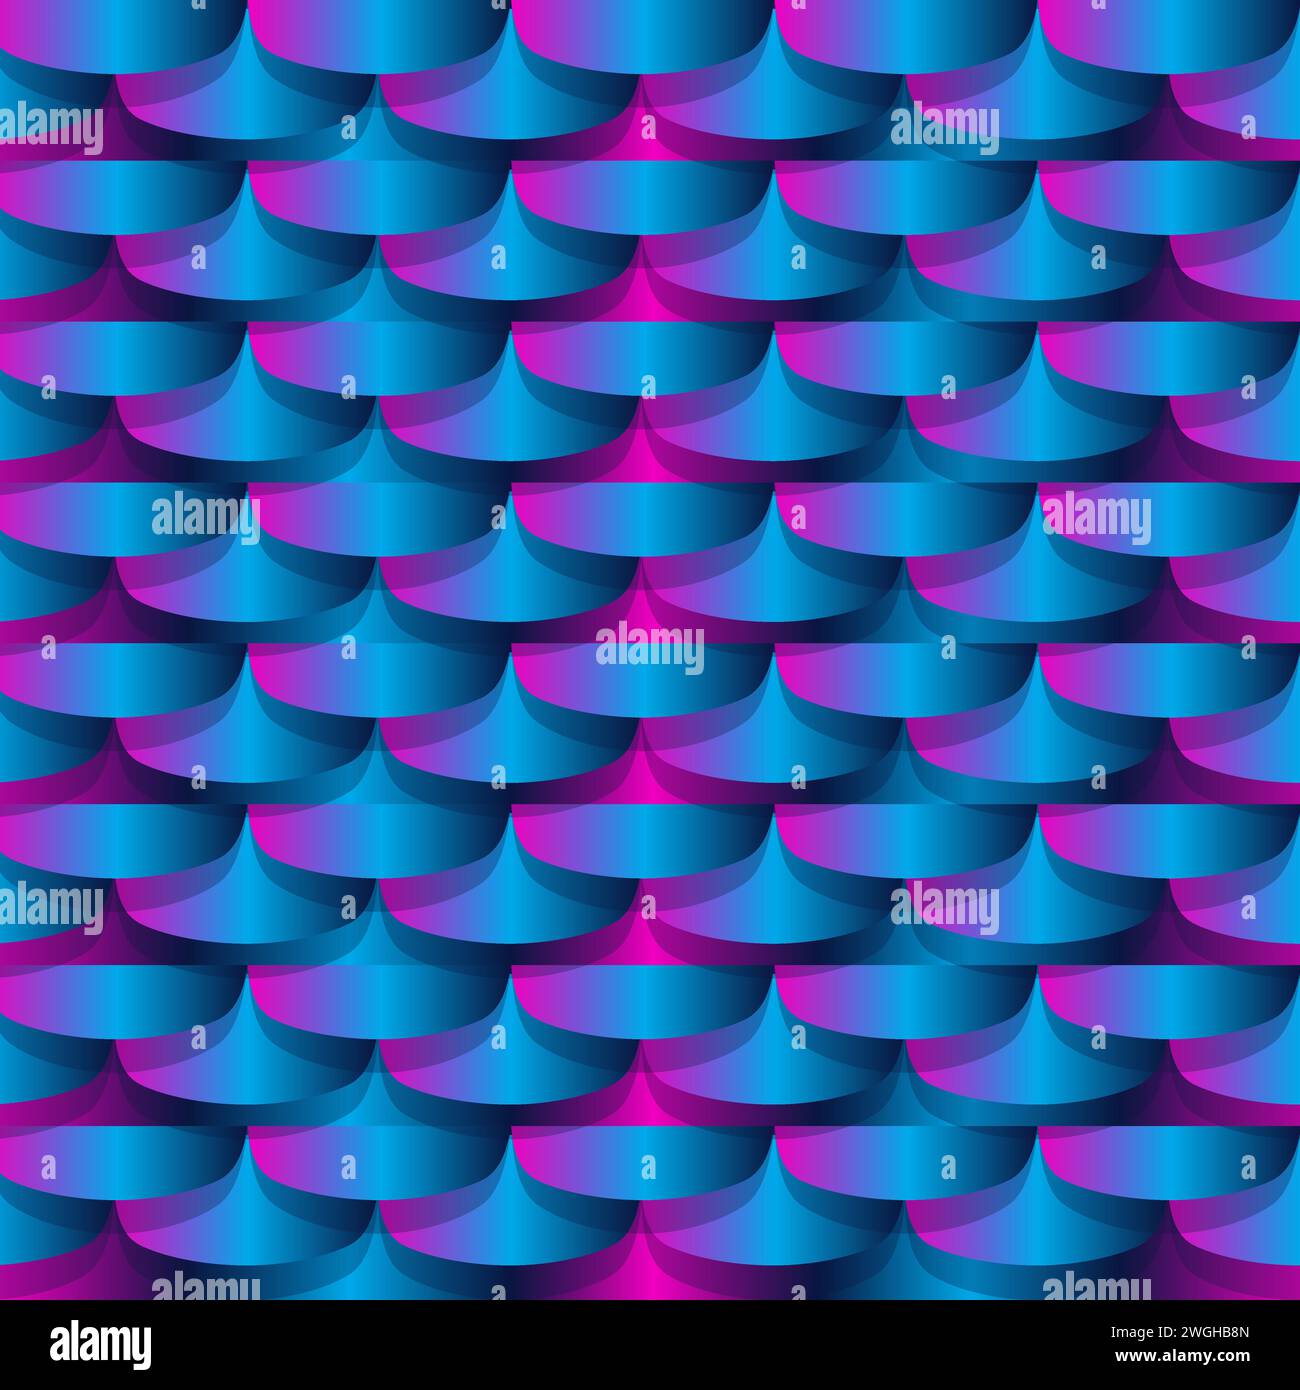 Llight Trails Ästhetik abstrakter Hintergrund in Neon holographisch.trendy moderne futuristische kybernetische Vektor Illustration.Social Media Story Event gree Stock Vektor